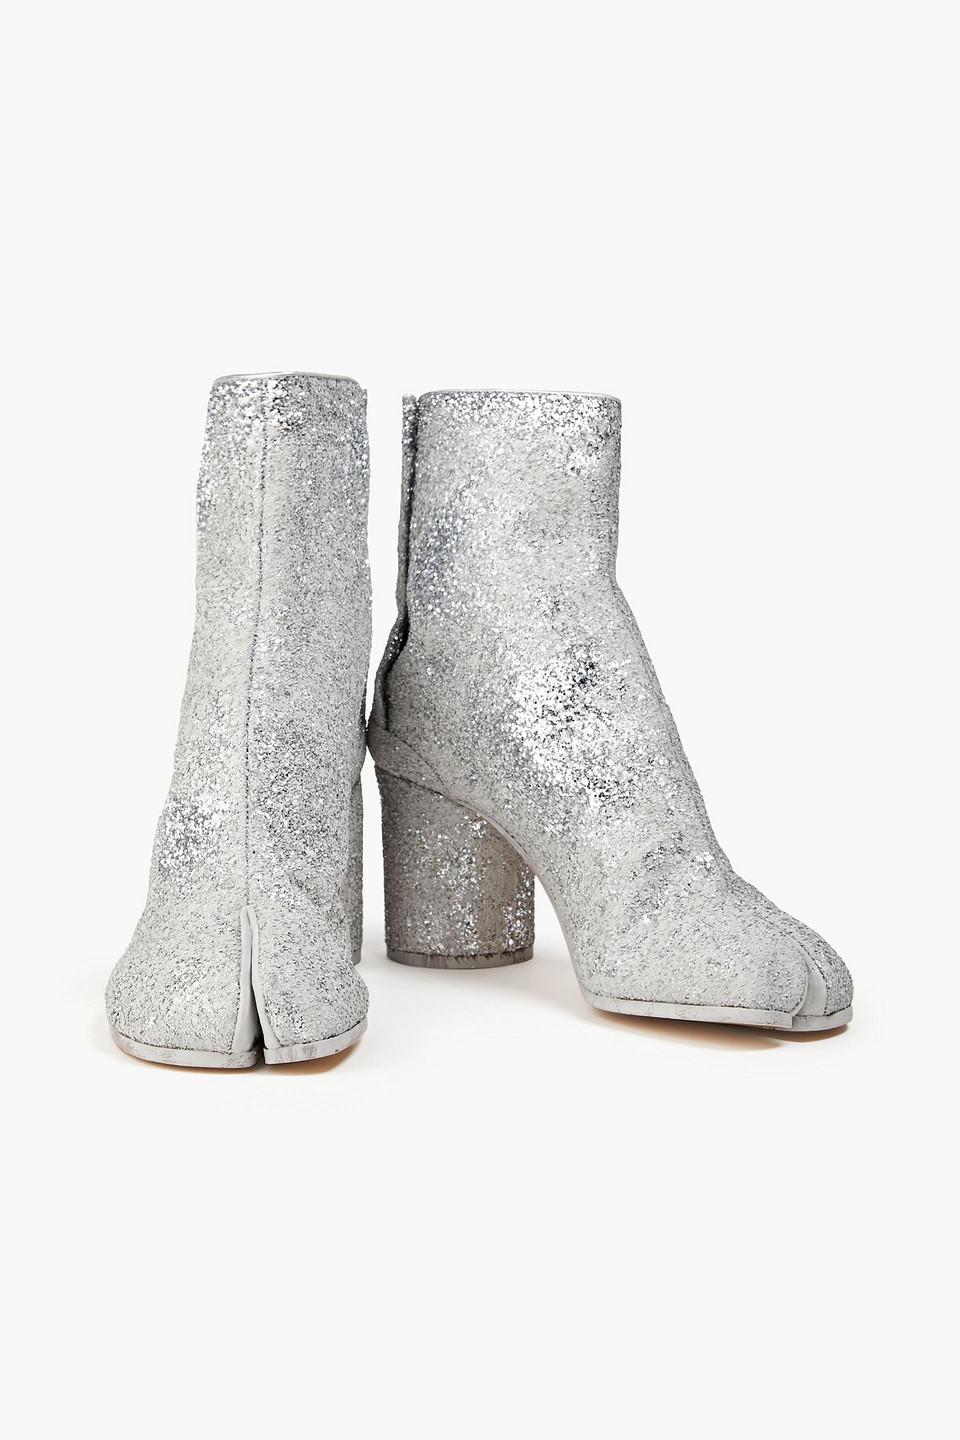 Maison Margiela Tabi Split-toe Glittered Woven Ankle Boots in Gray 